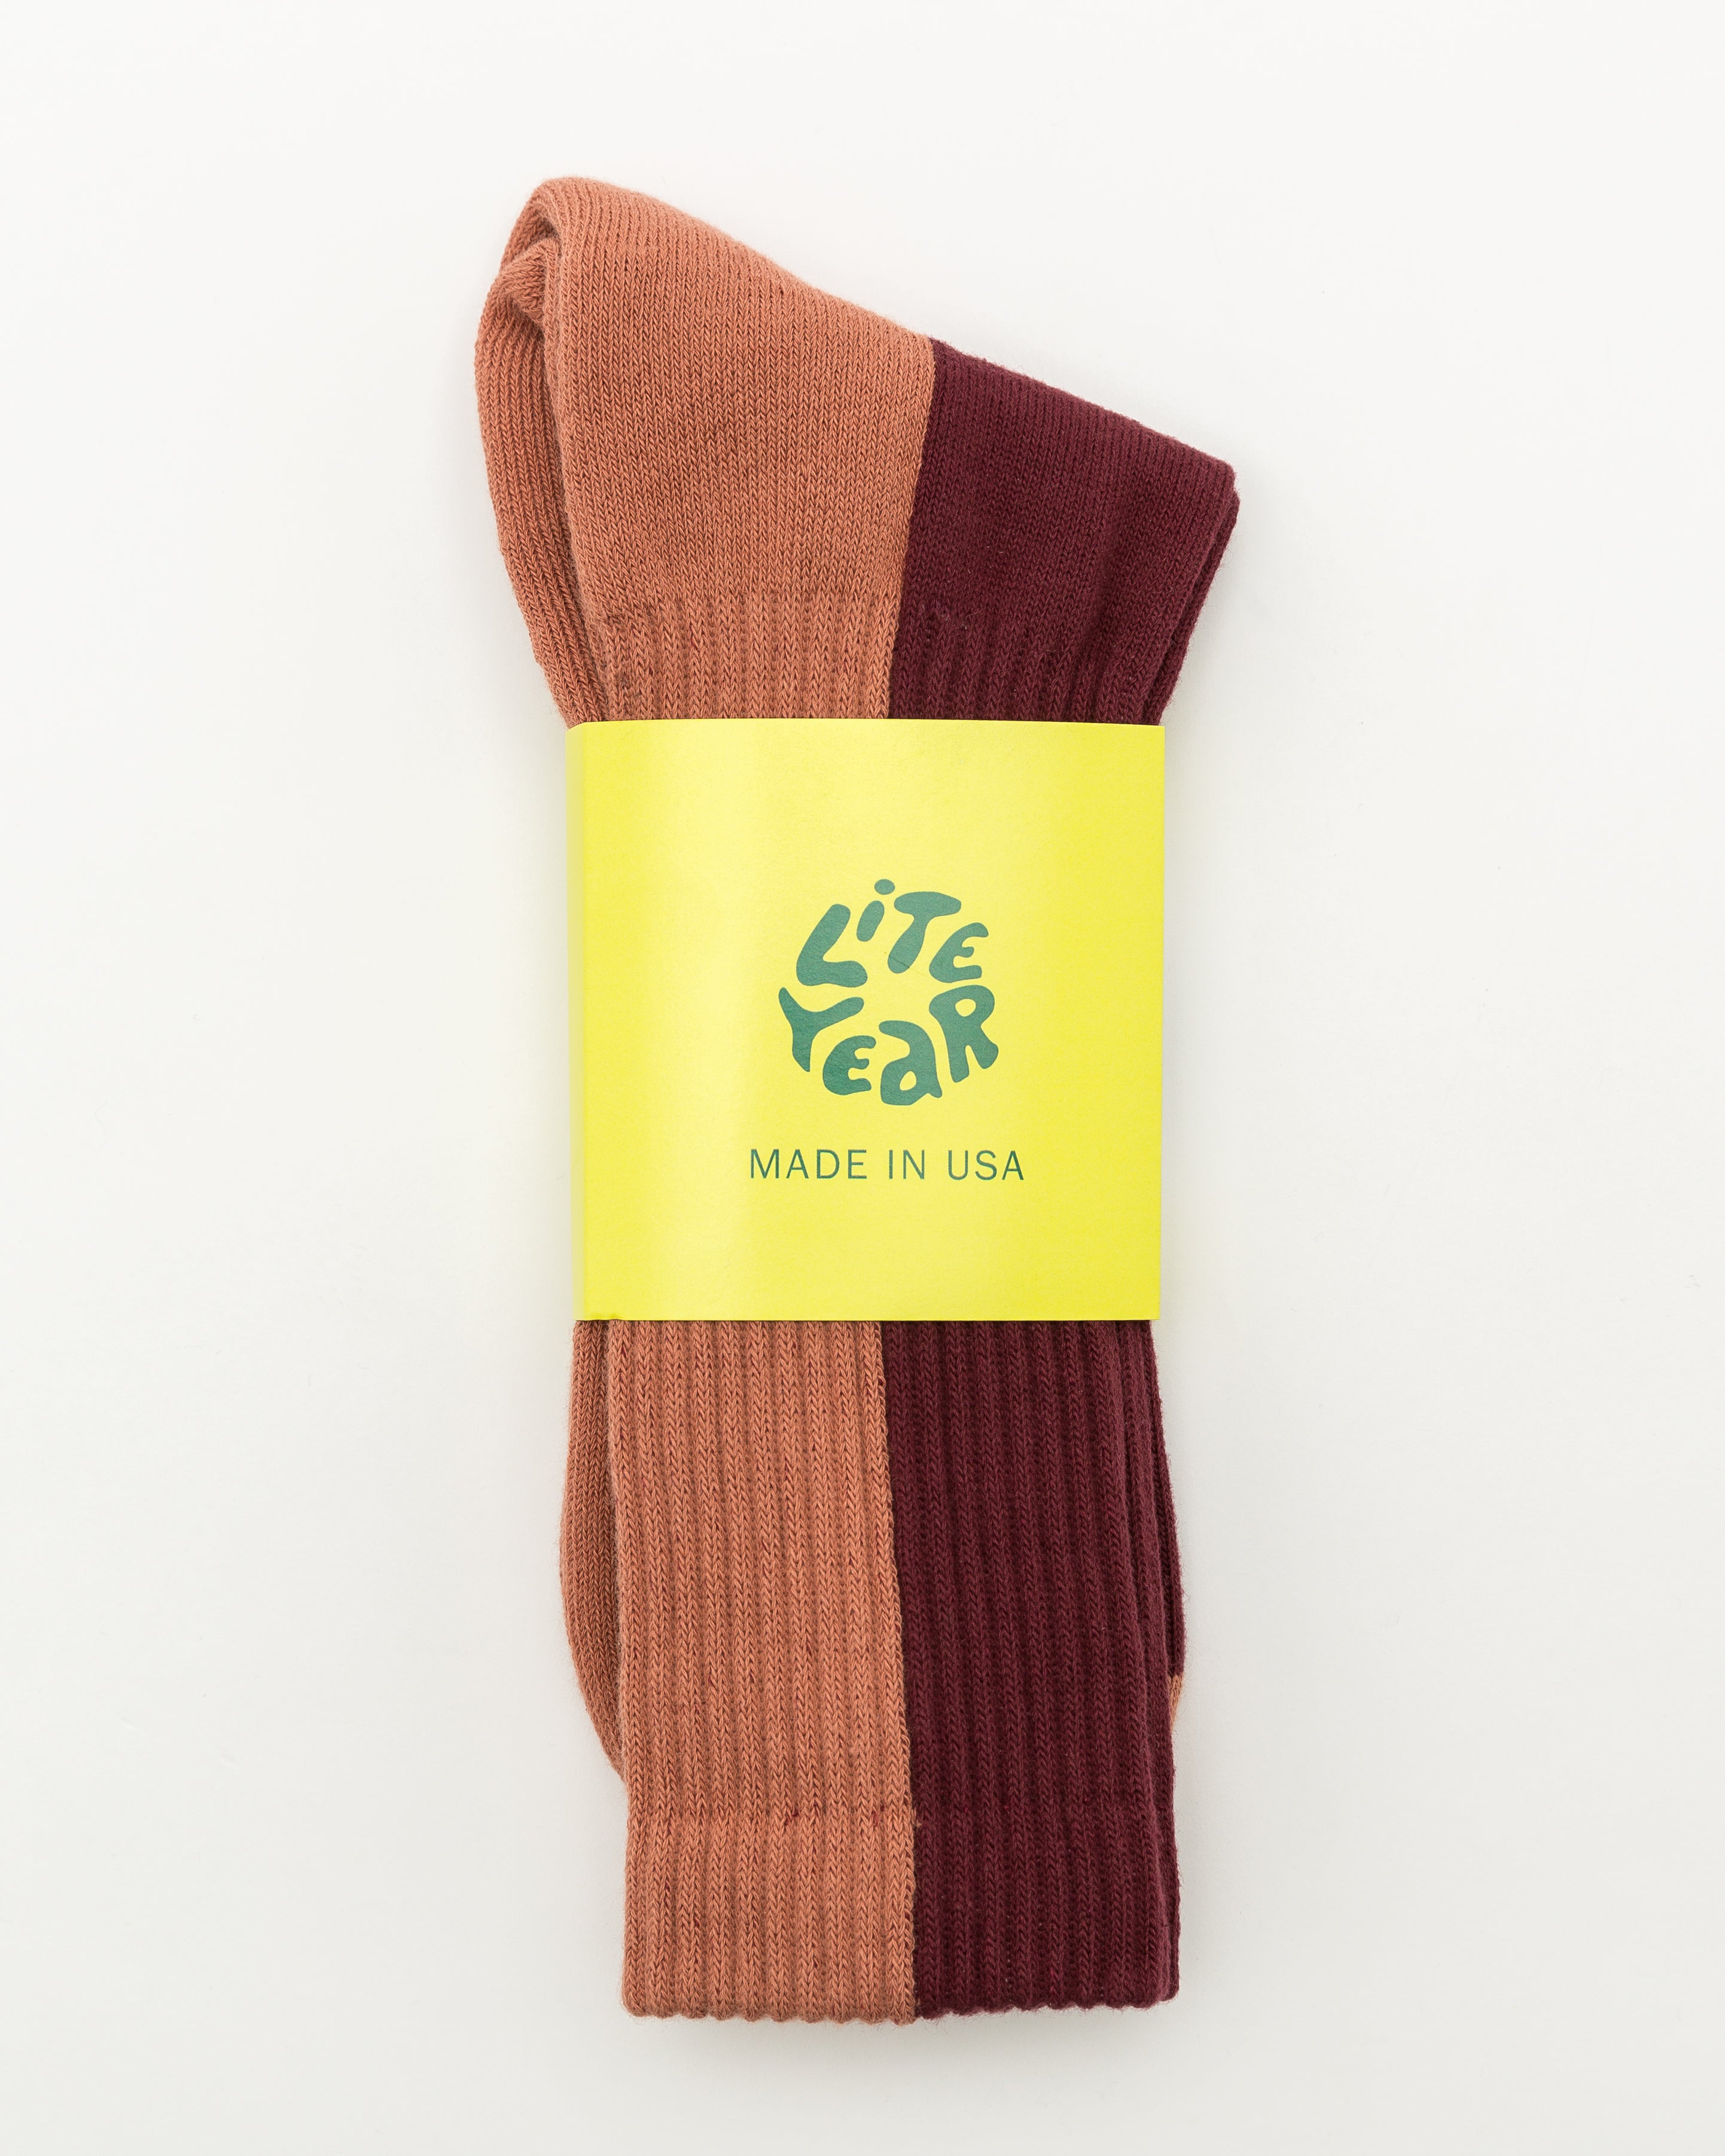 2 Tone Crew Socks in Cantaloupe/Brick